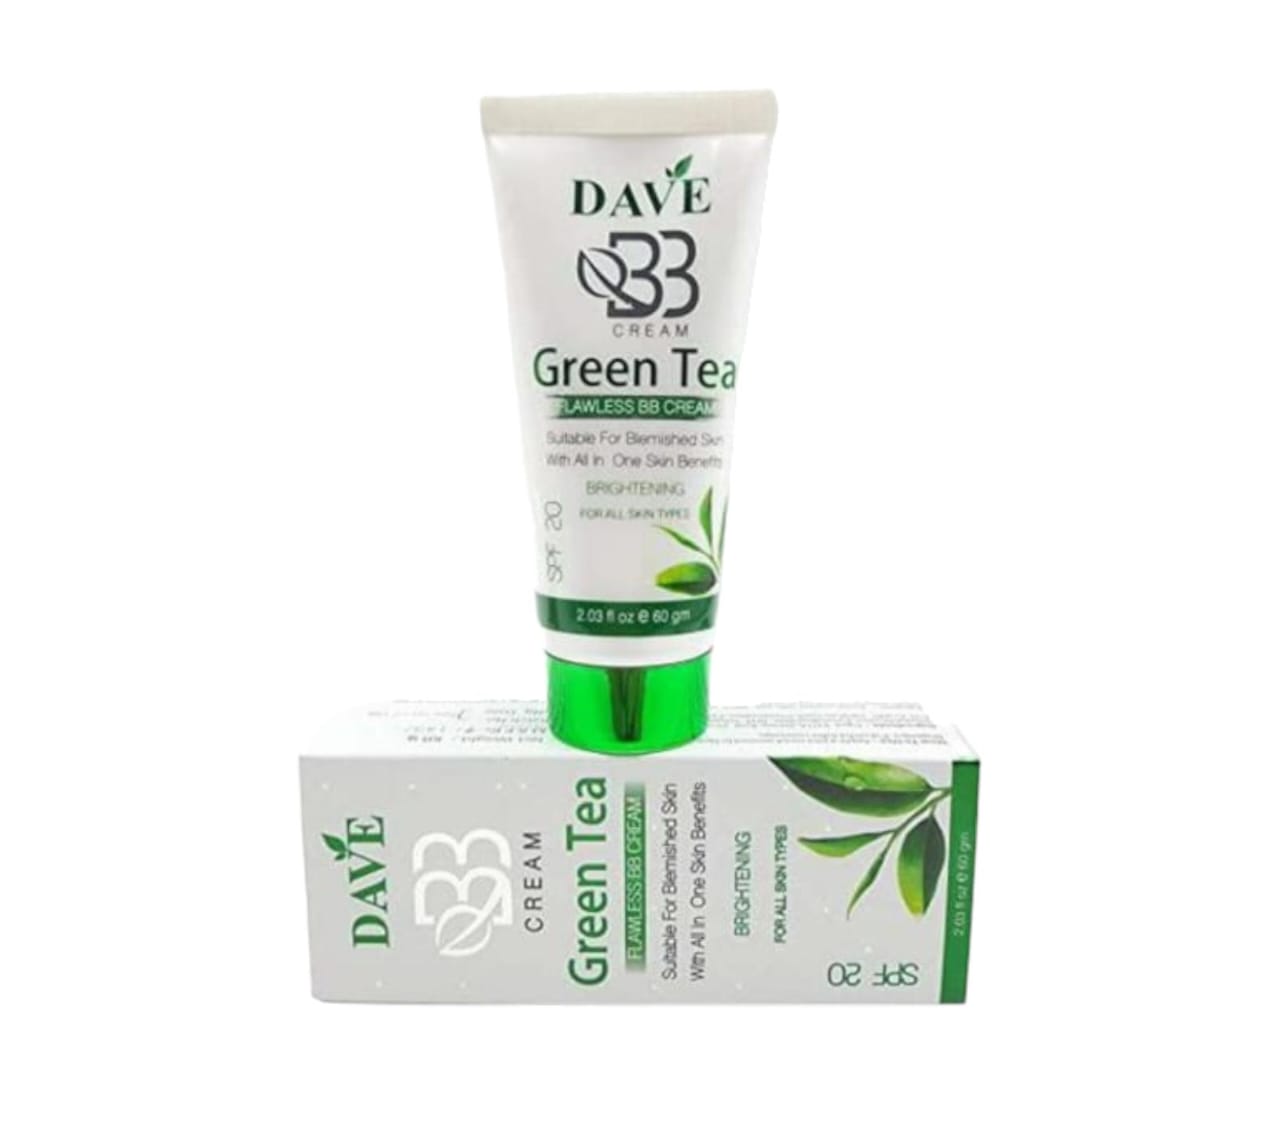 Dave BB Green Tea 